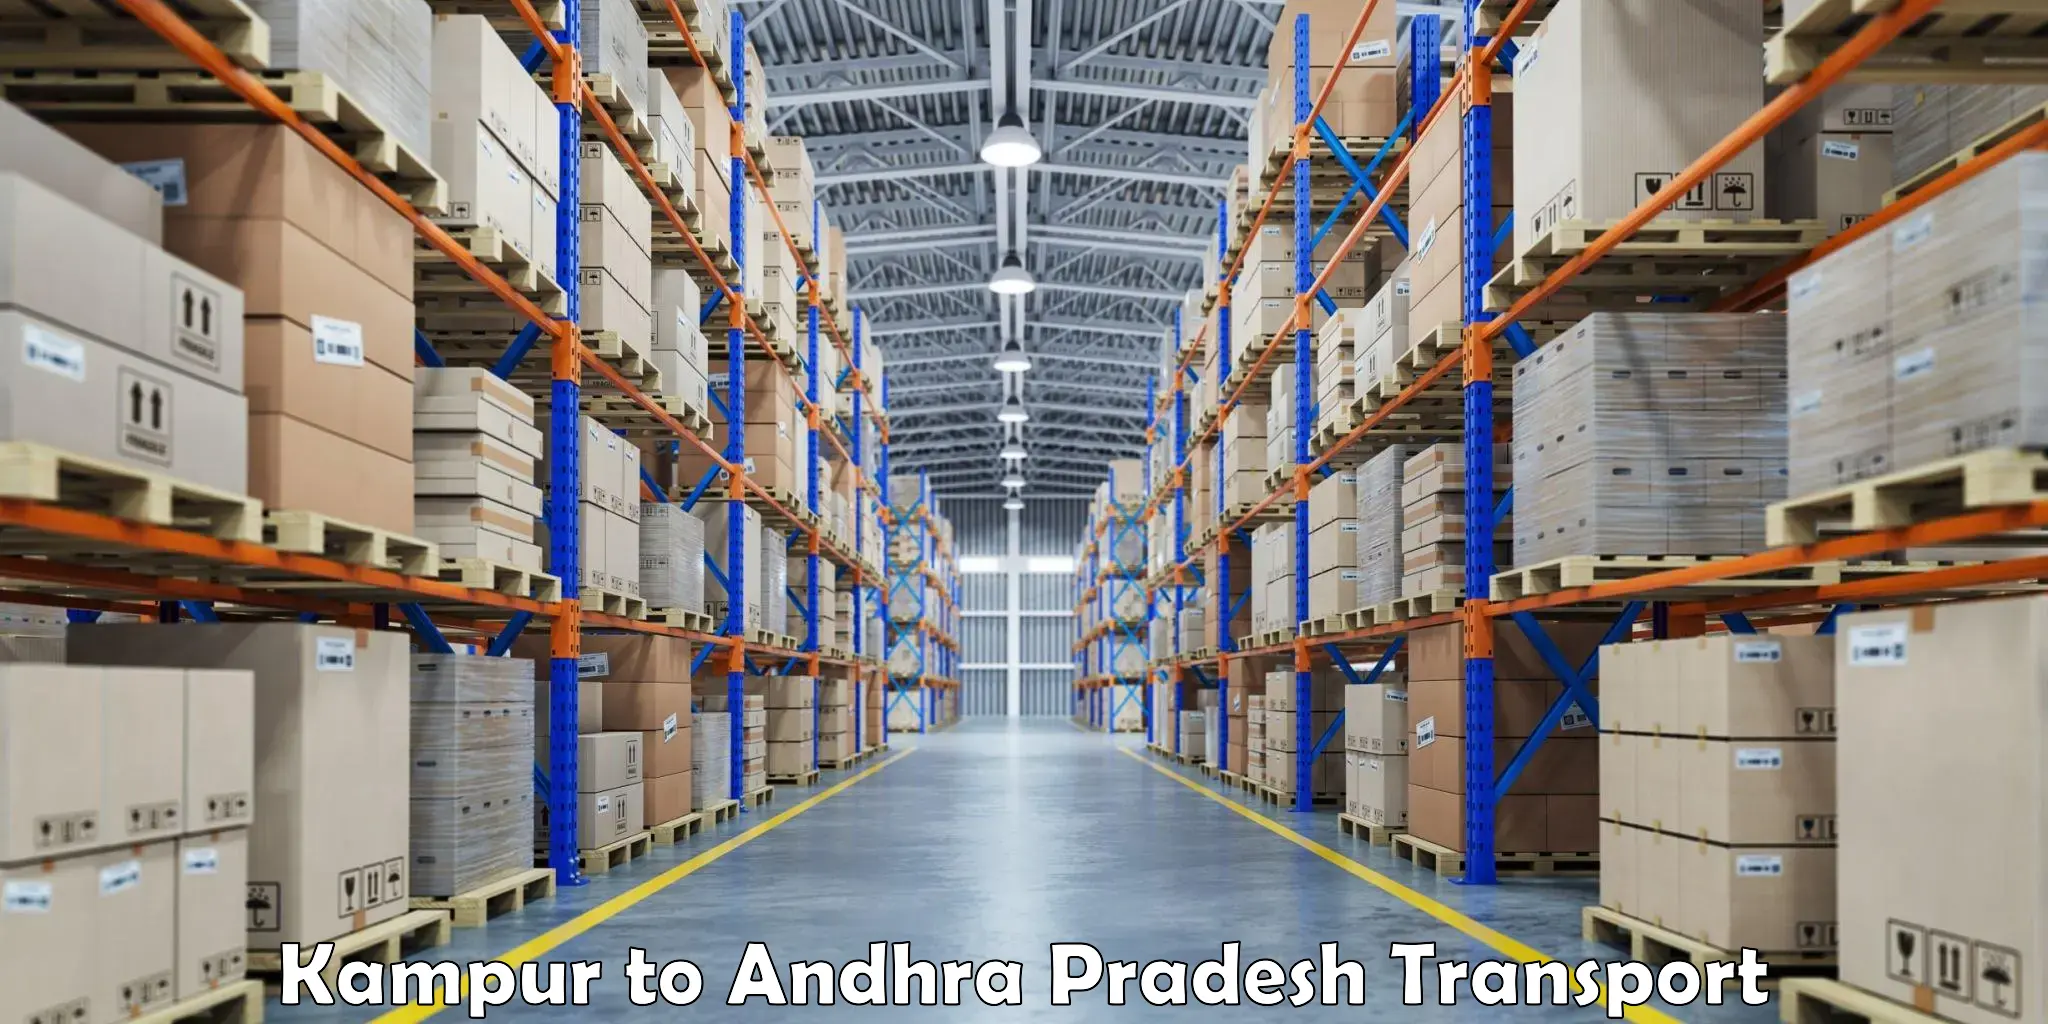 Part load transport service in India Kampur to Puttur Tirupati